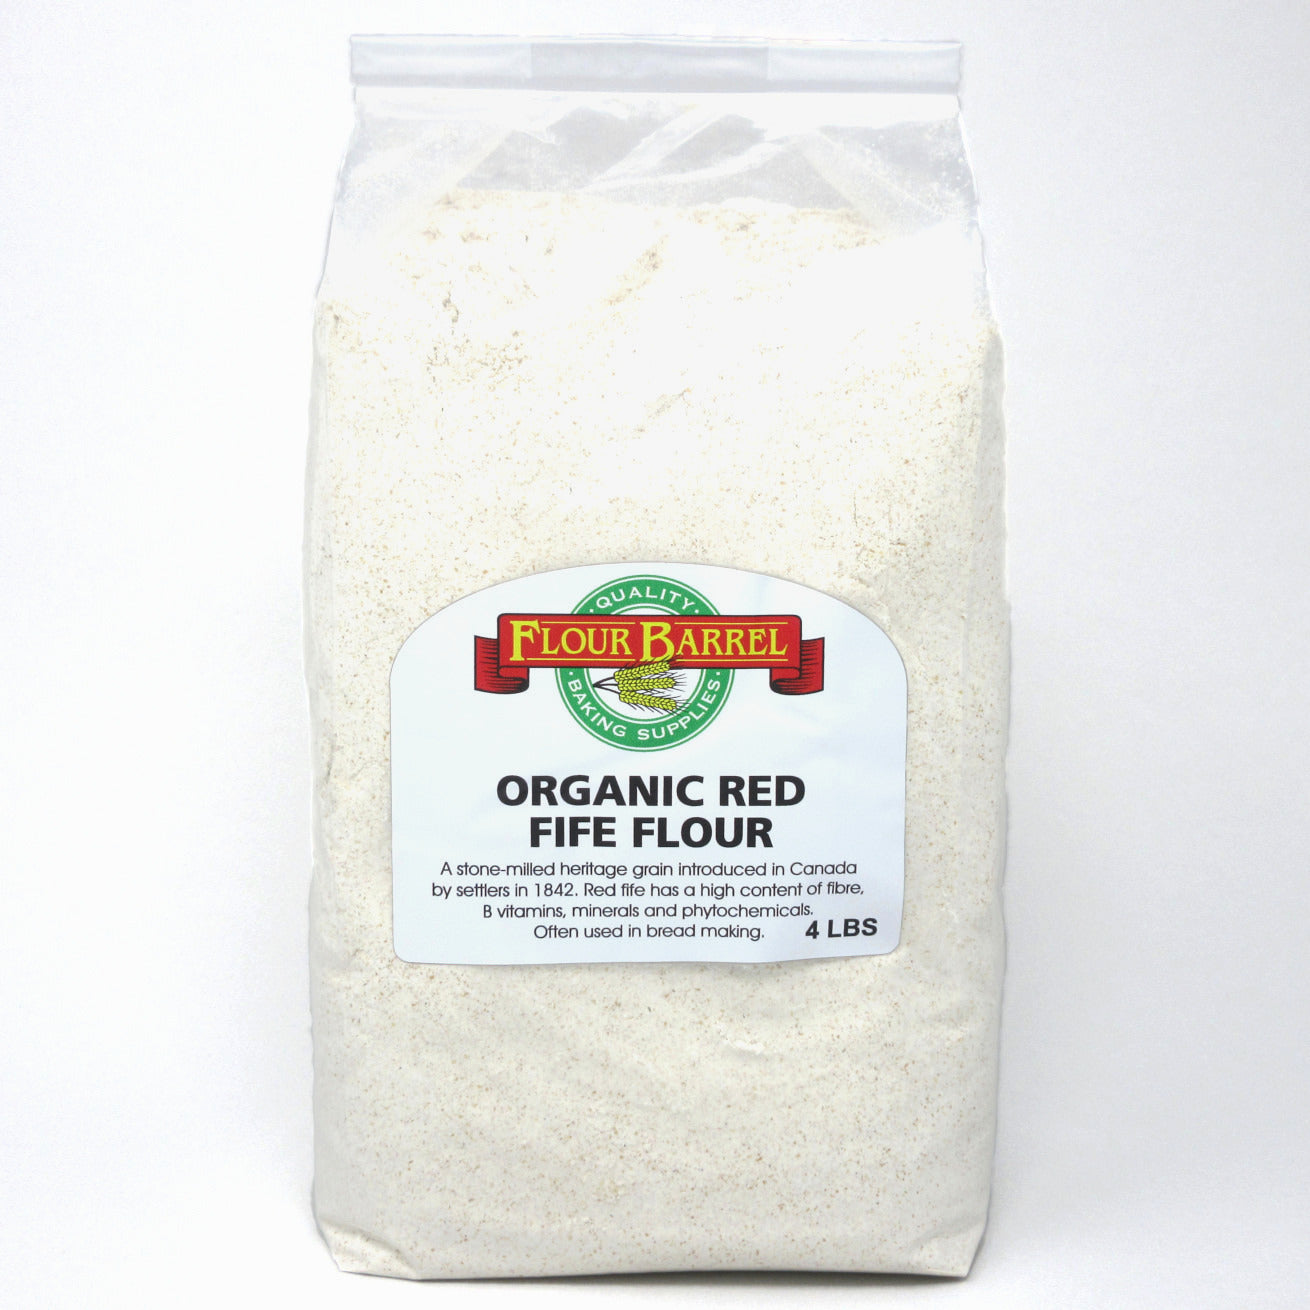 Flour Barrel product image - Organic Red Fife Flour